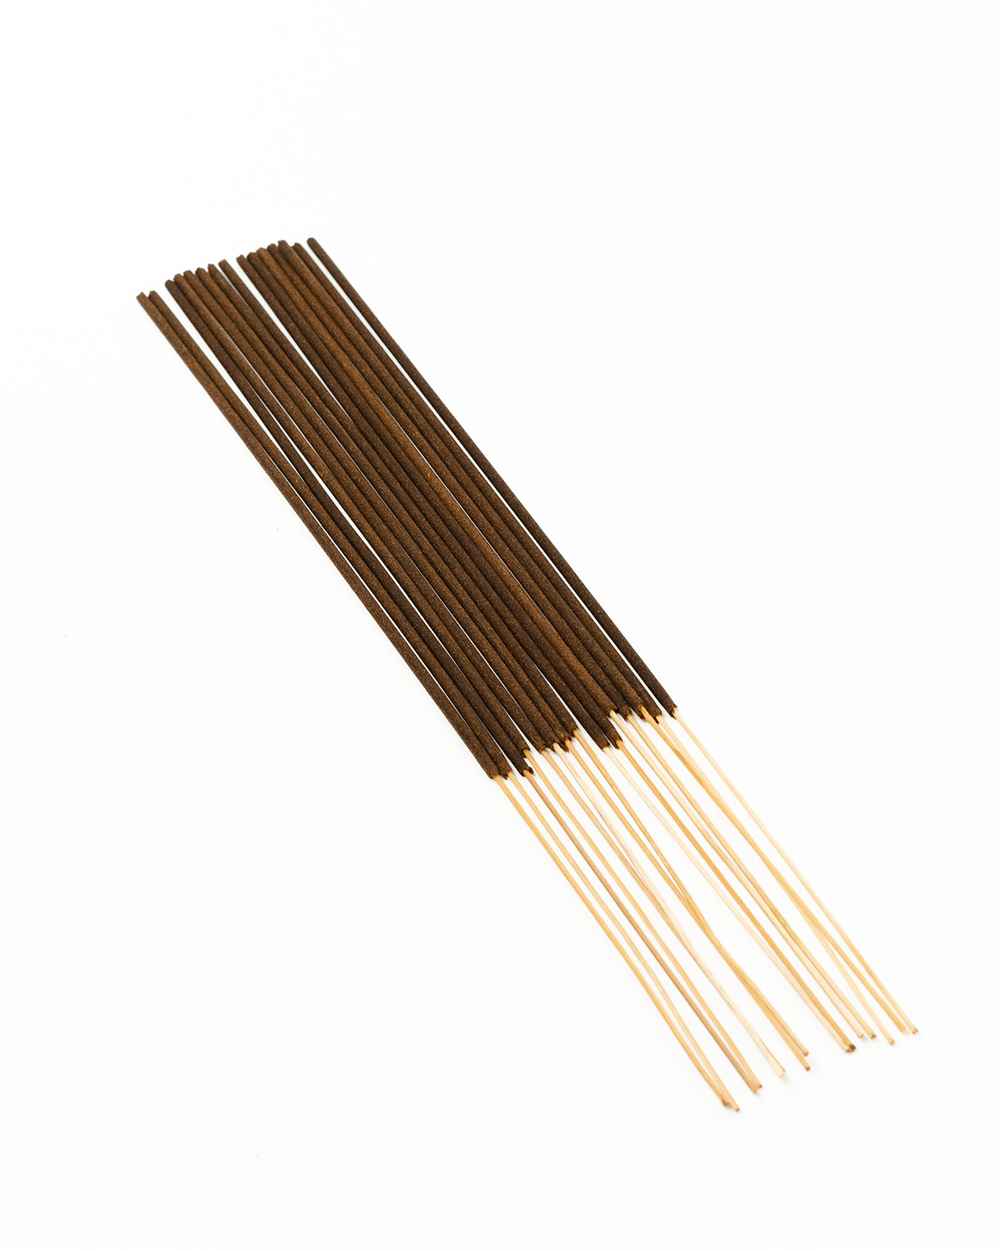 KNOLL Incense Sticks - 15 Sticks